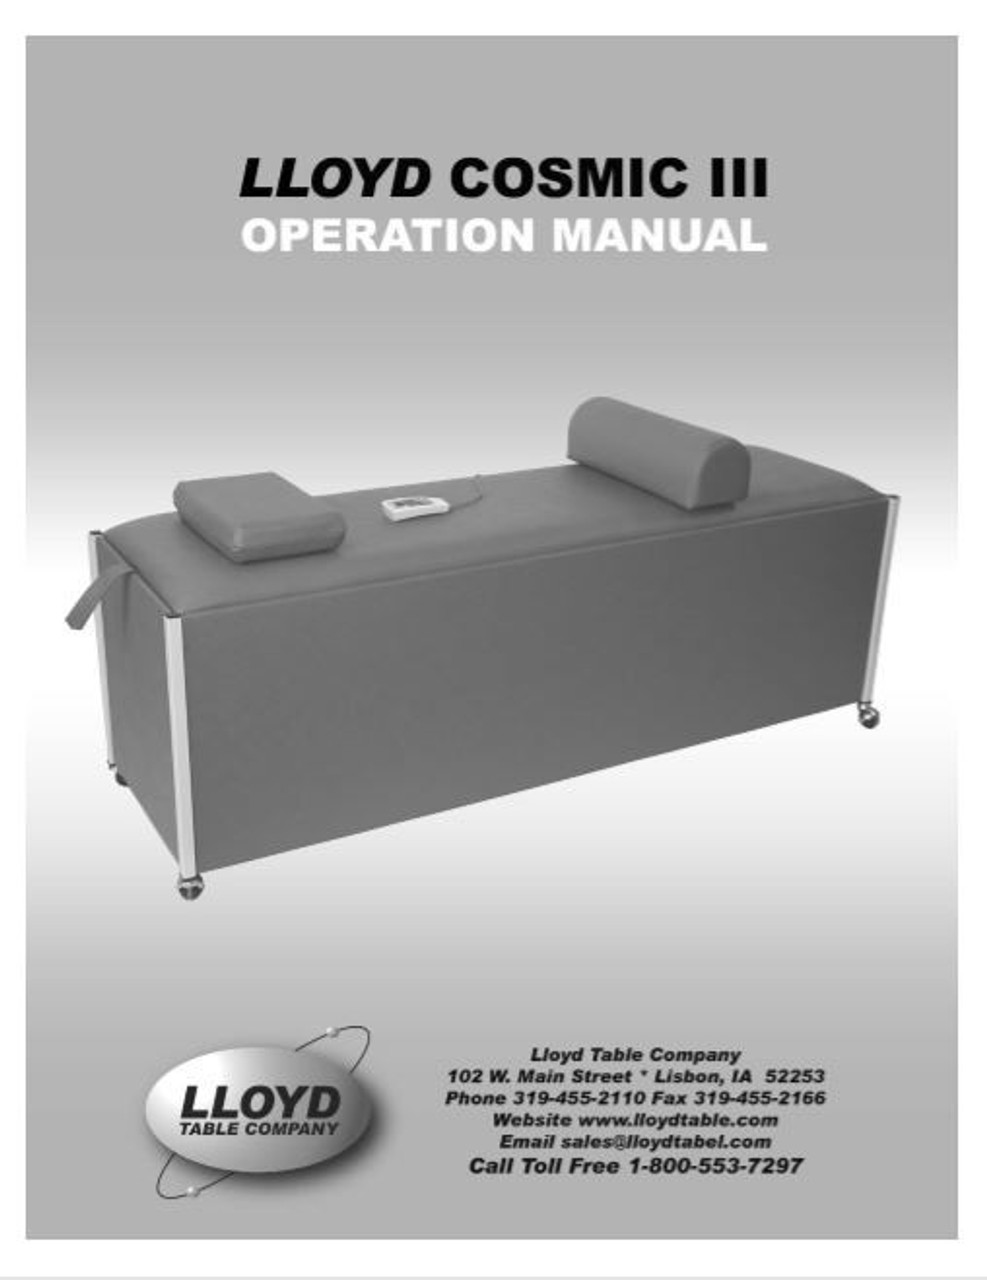 Lloyd Cosmic III IST Operation Manual PDF Download